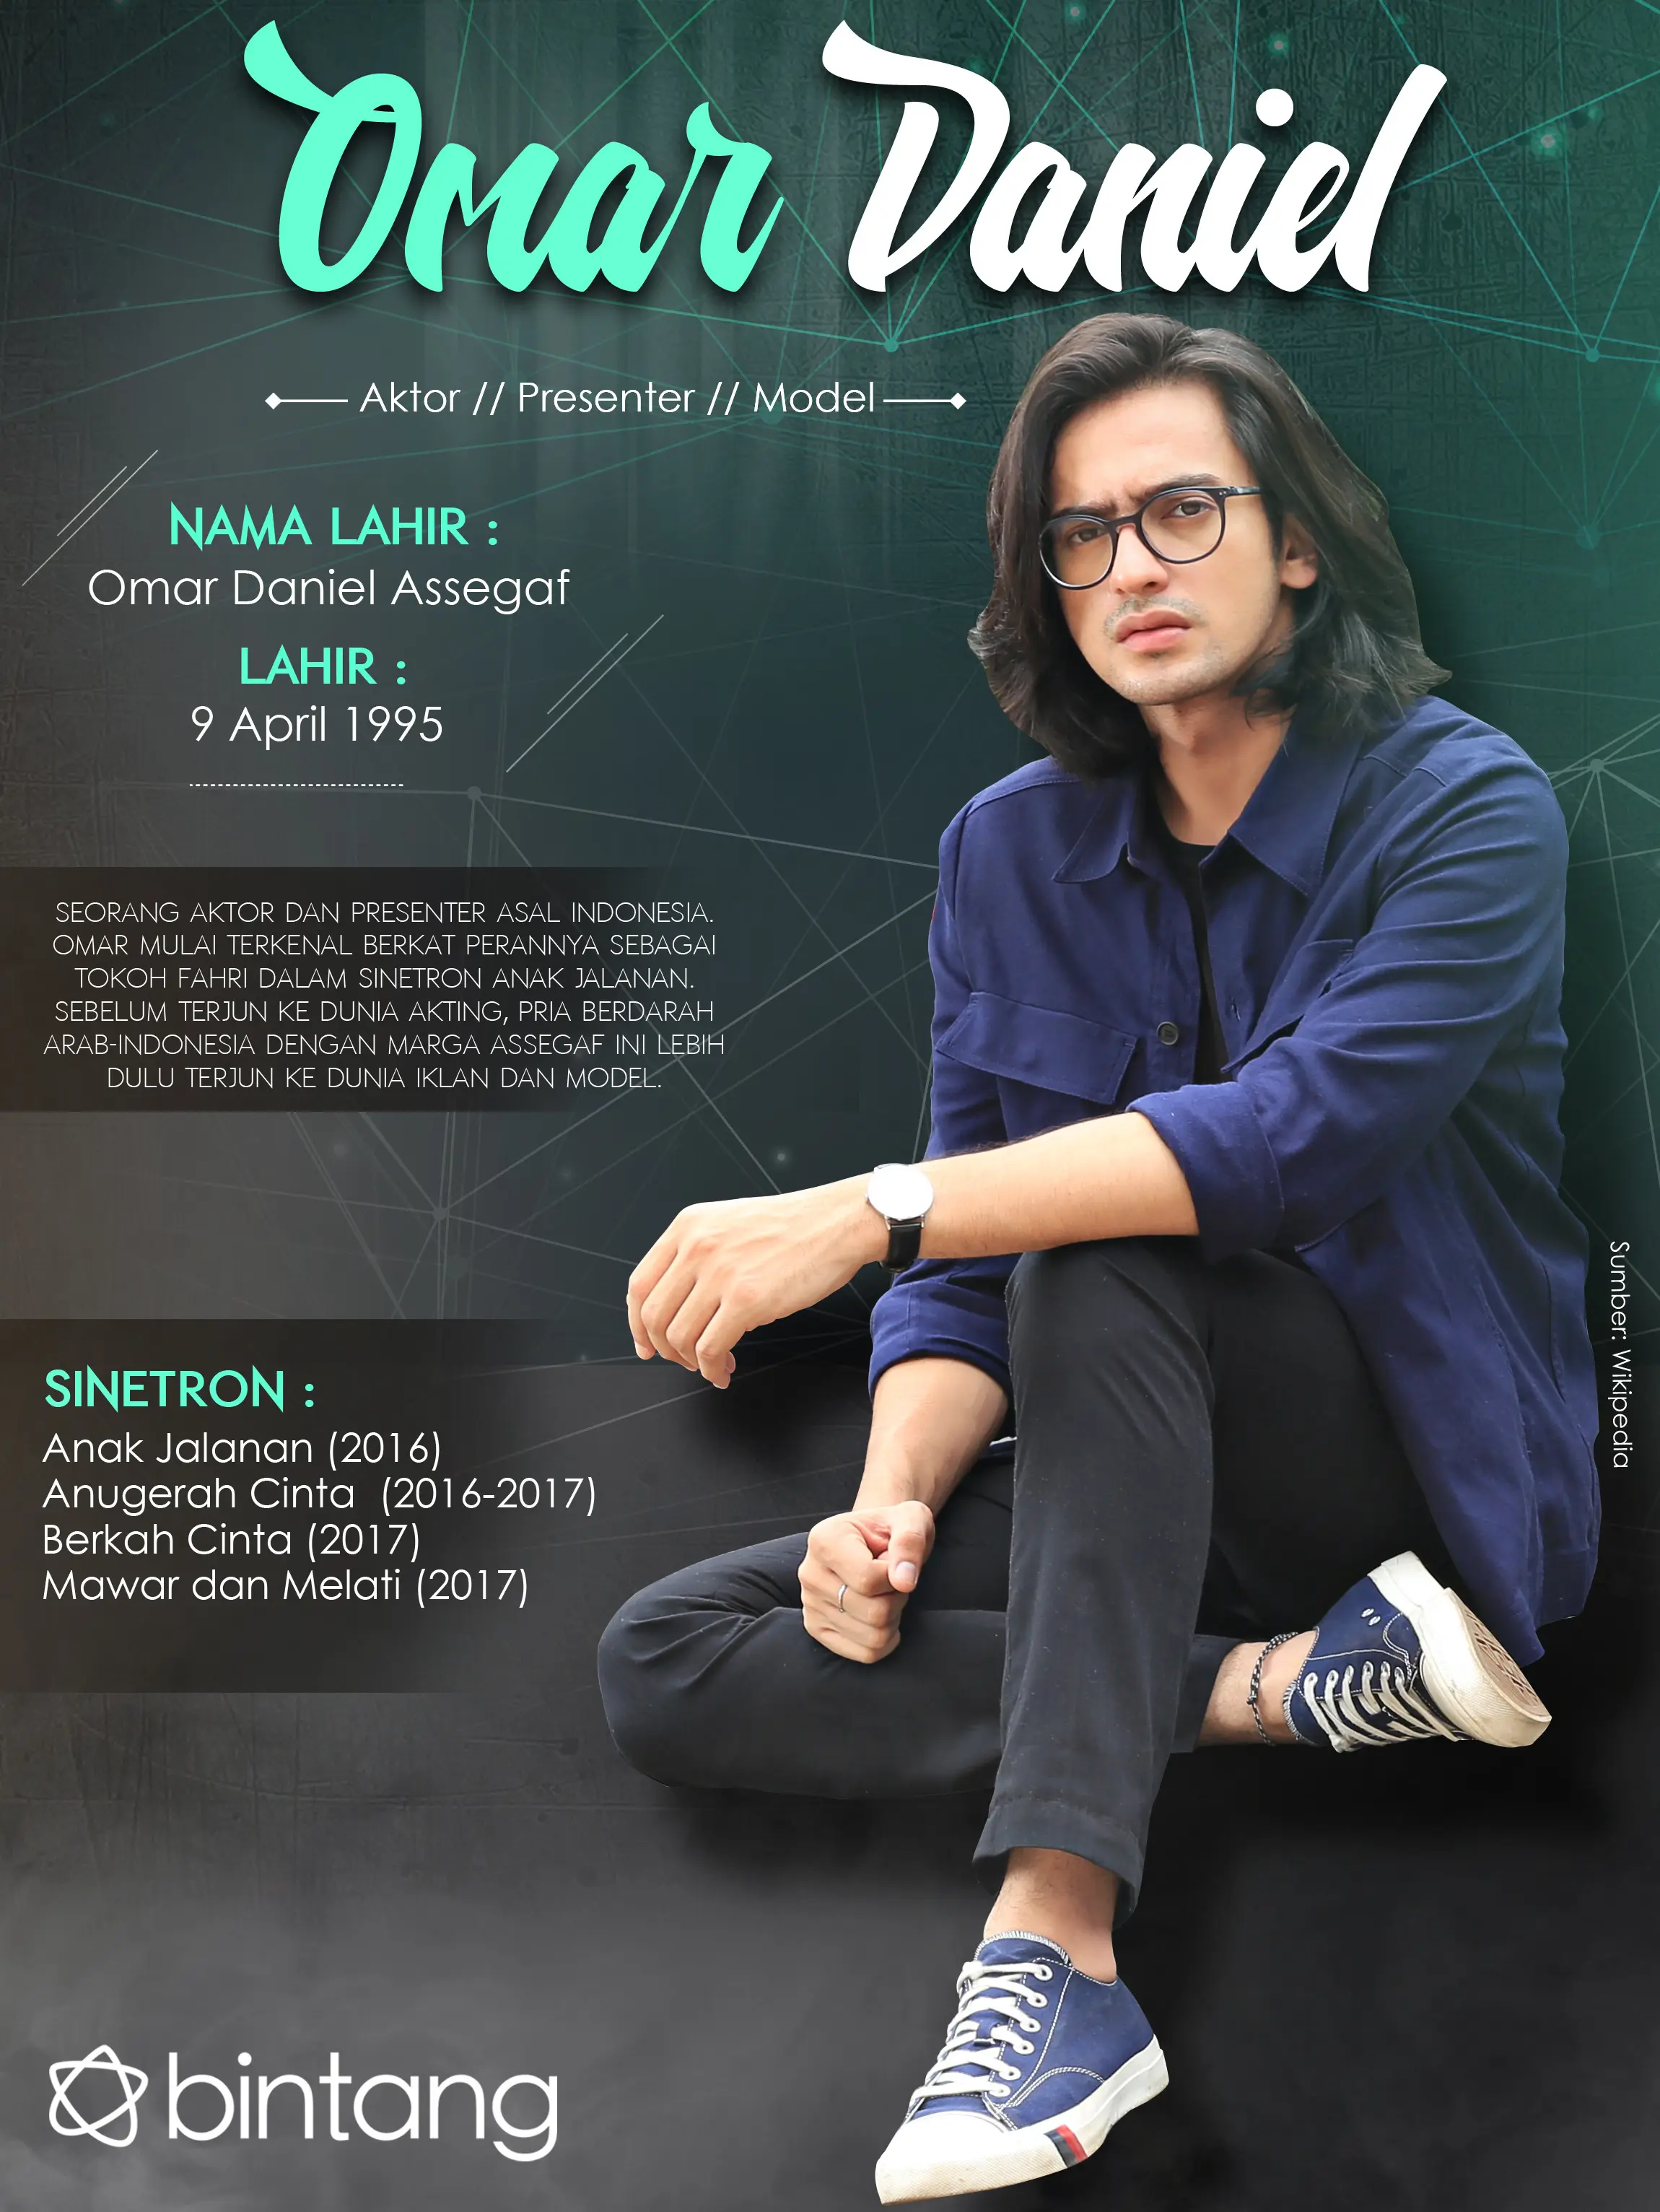  Celeb Bio Omar Daniel (Foto: Adrian Putra, Desain: Nurman abdul Hakim/Bintang.com)